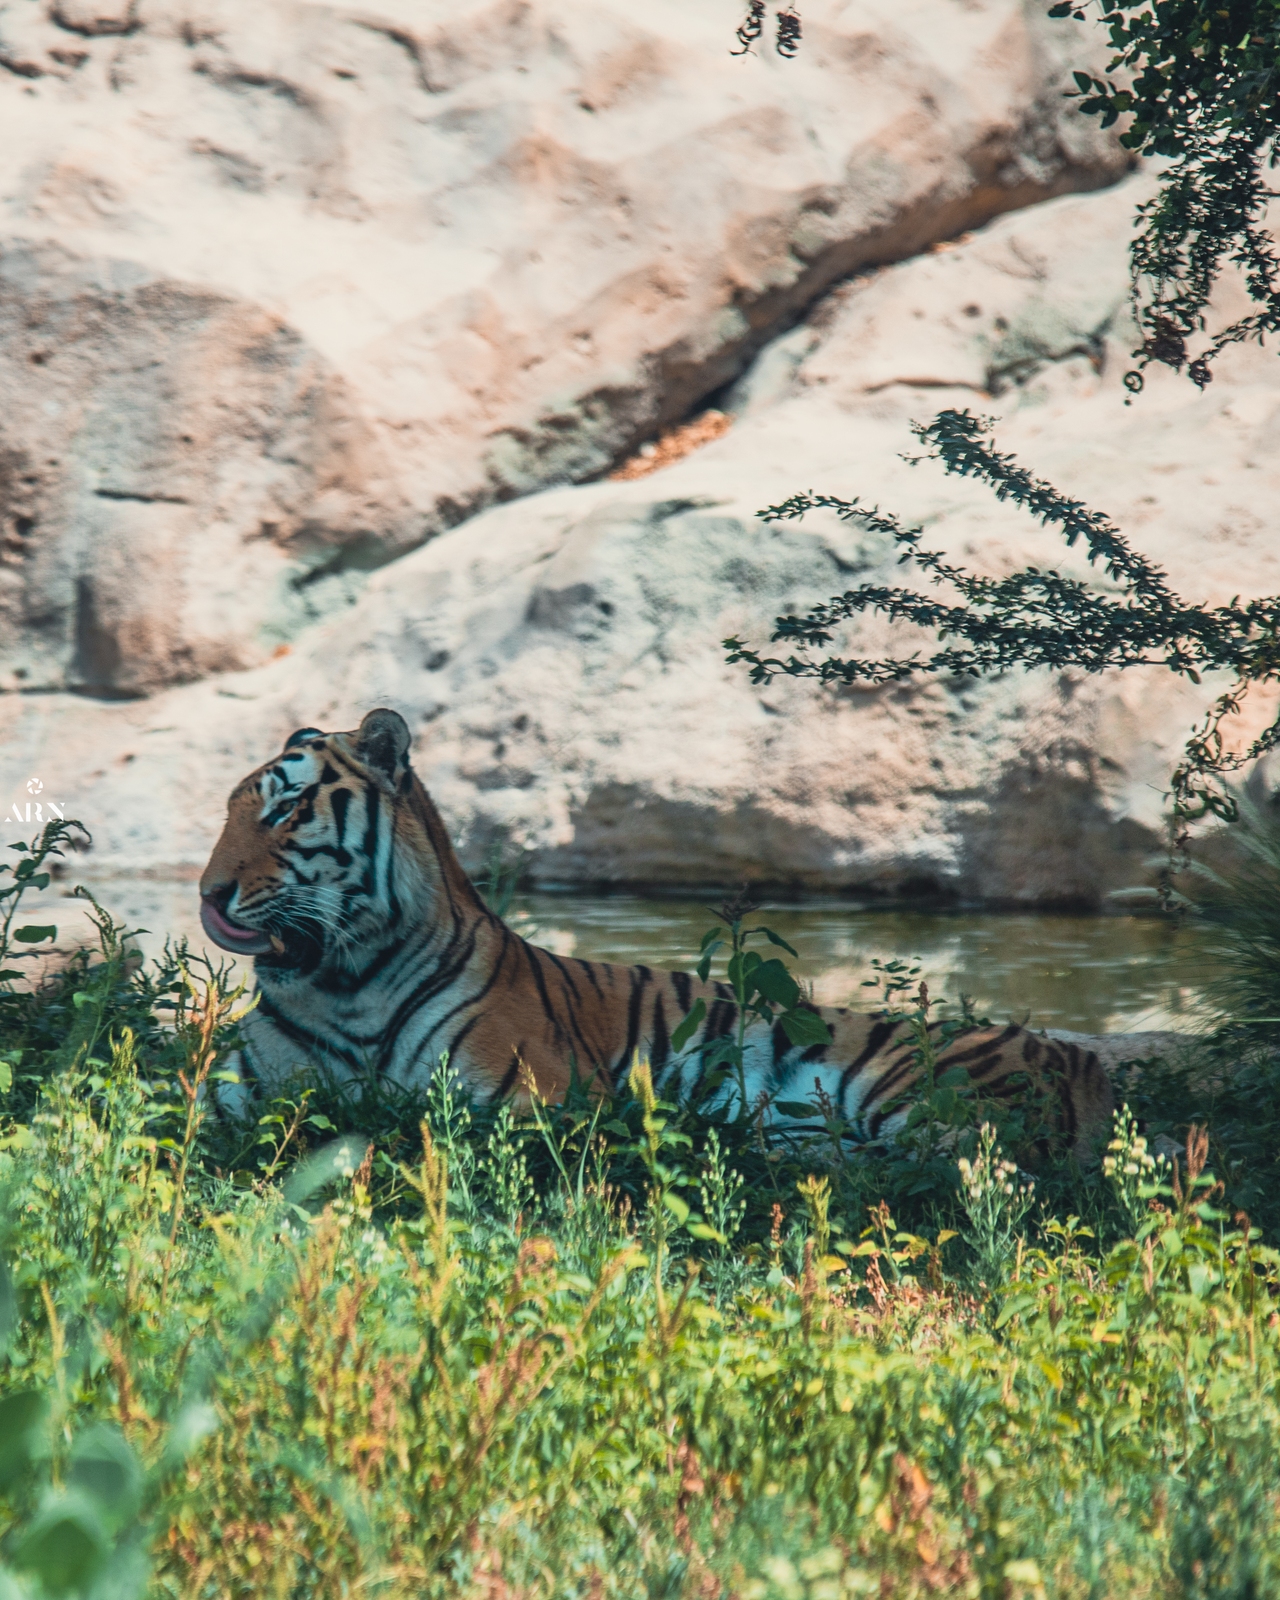 Image of Dubai Safari Park by raffae nauman